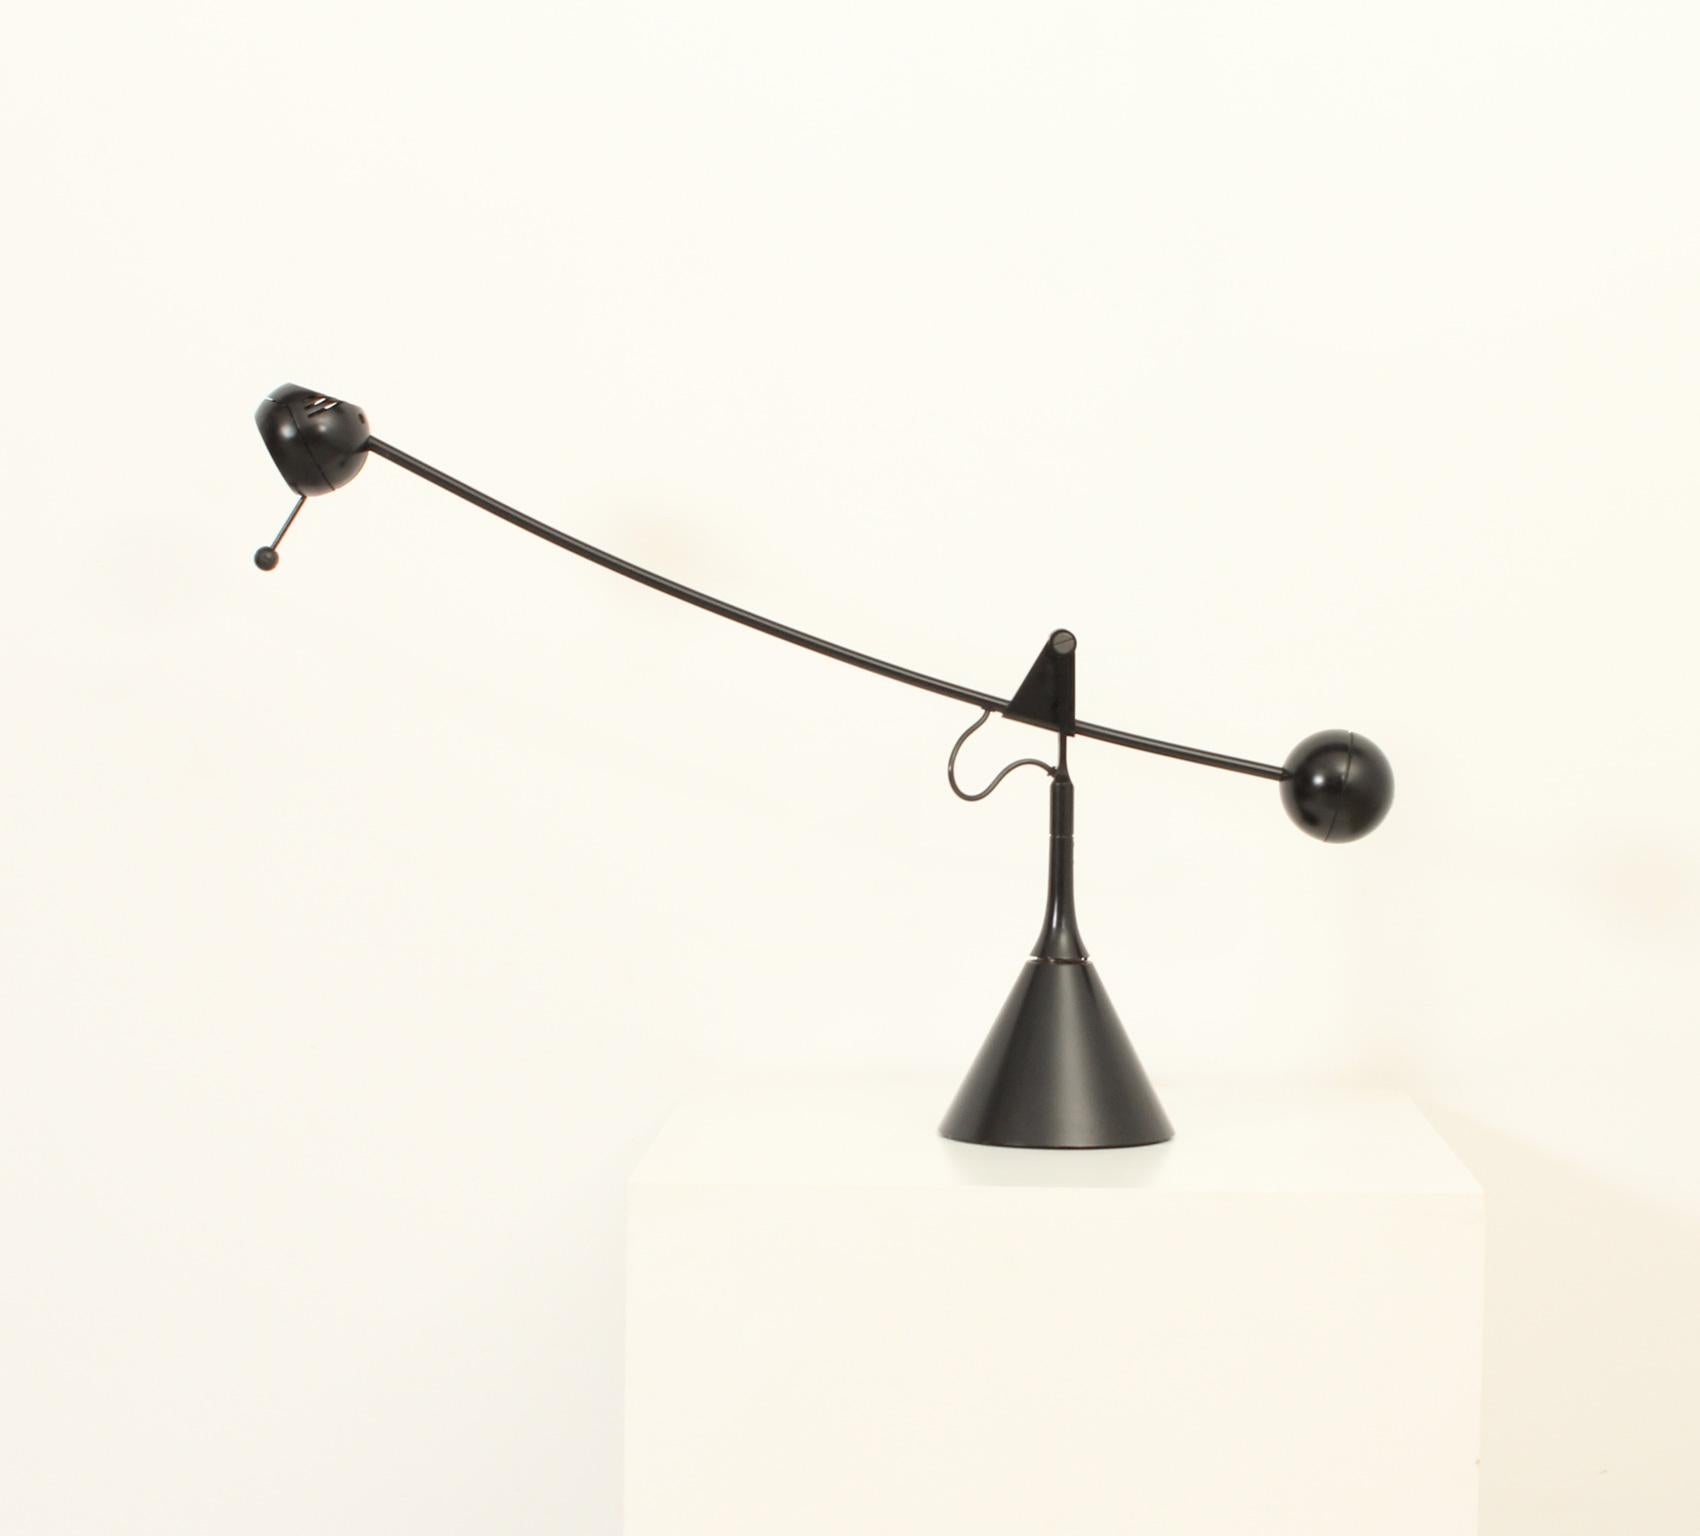 Spanish Calder Table Lamp by Enric Franch for Metalarte, 1975